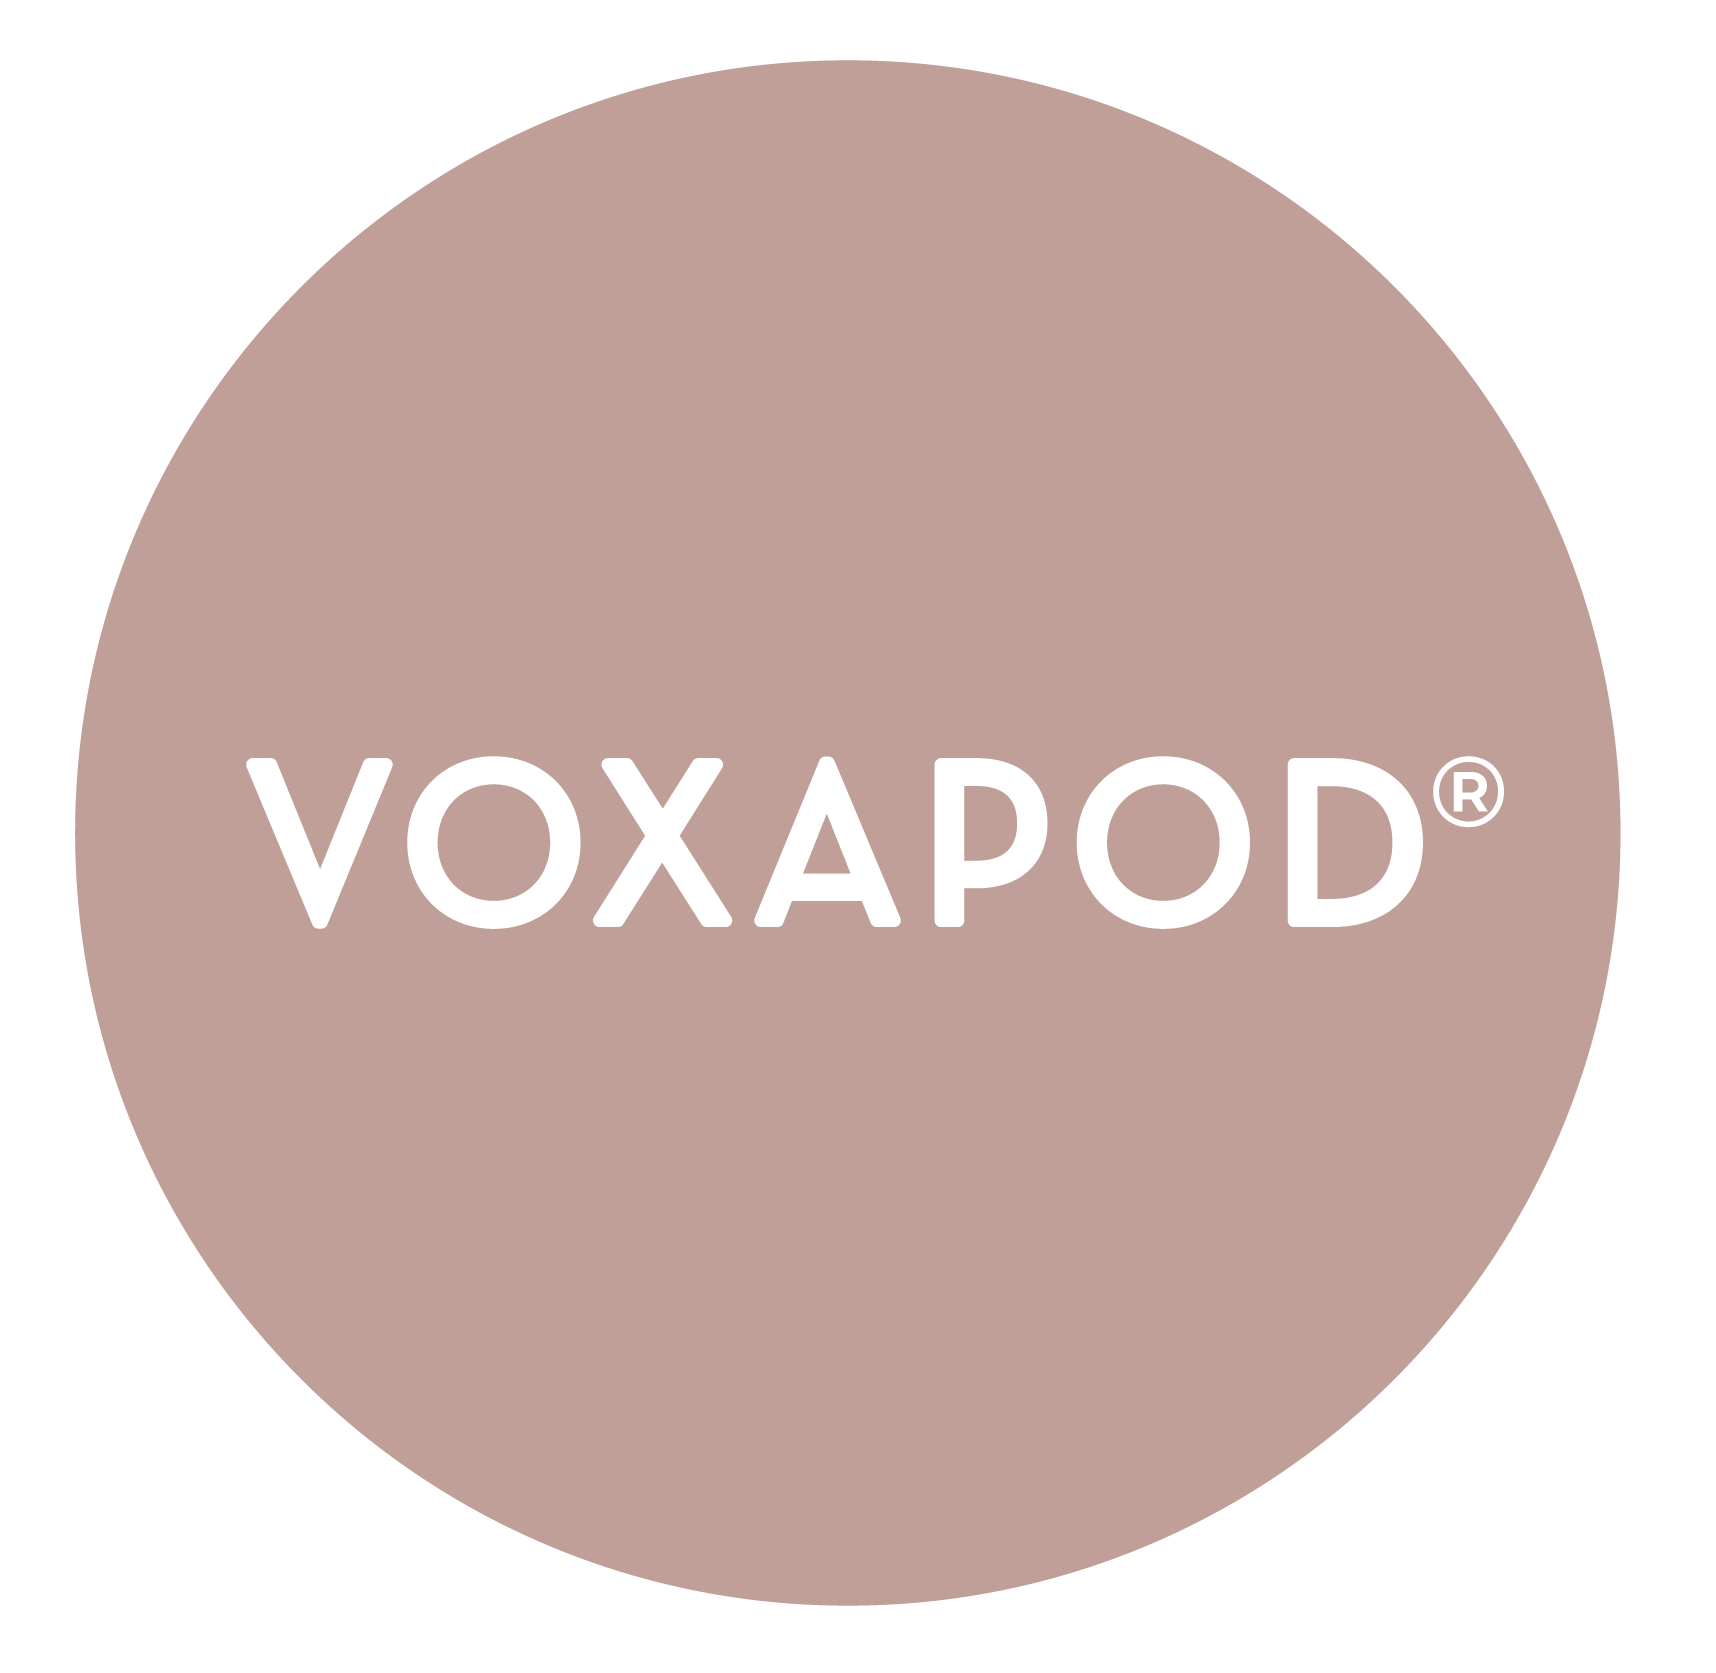 VOXAPOD® Coupon Codes